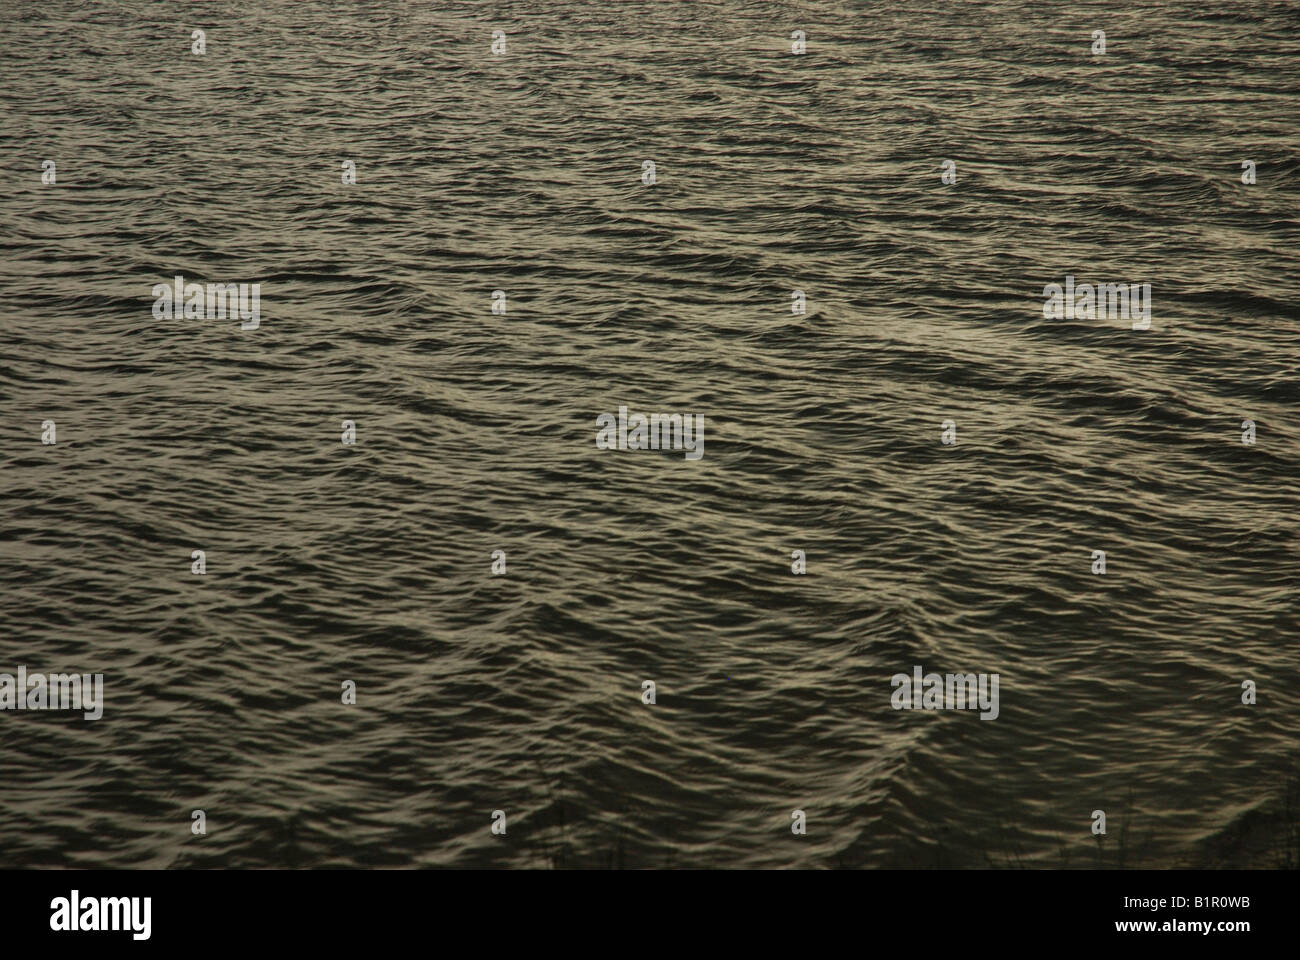 nature, water, sea, outdoors, atmospheric, wind, windi, dawn, nobody, rain, rainy, dramatic Stock Photo